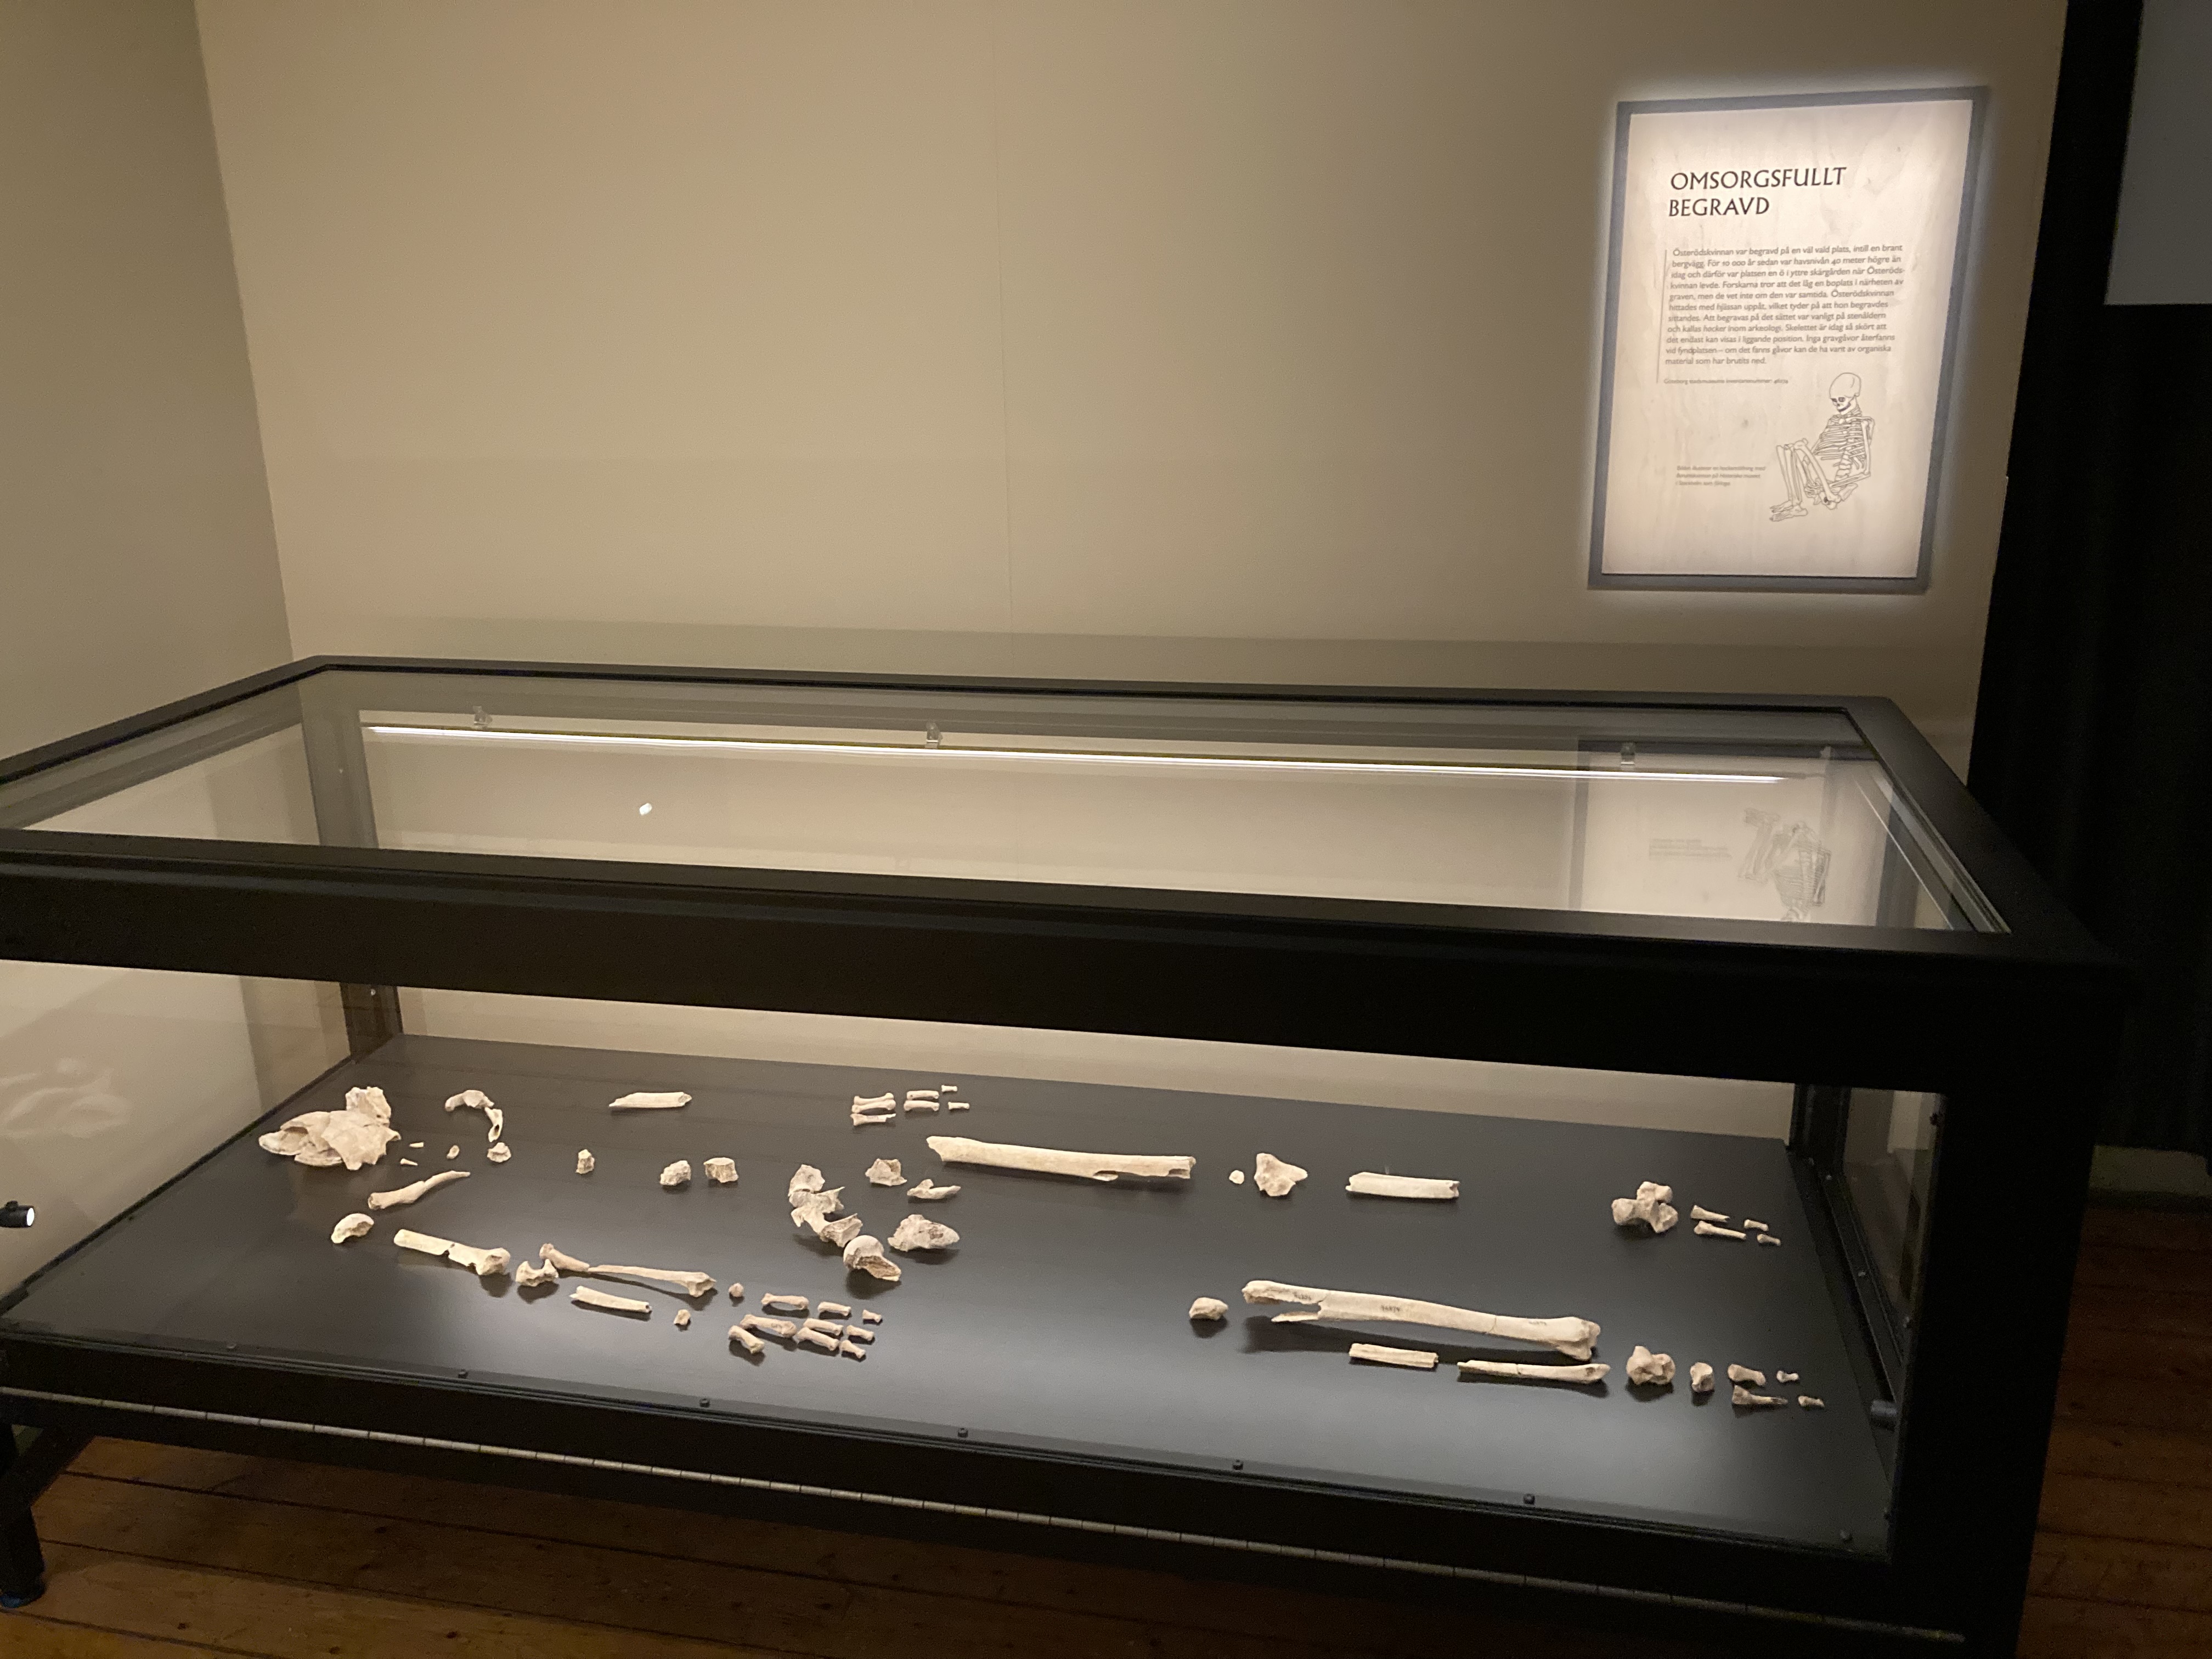 Österödskvinnans skelett